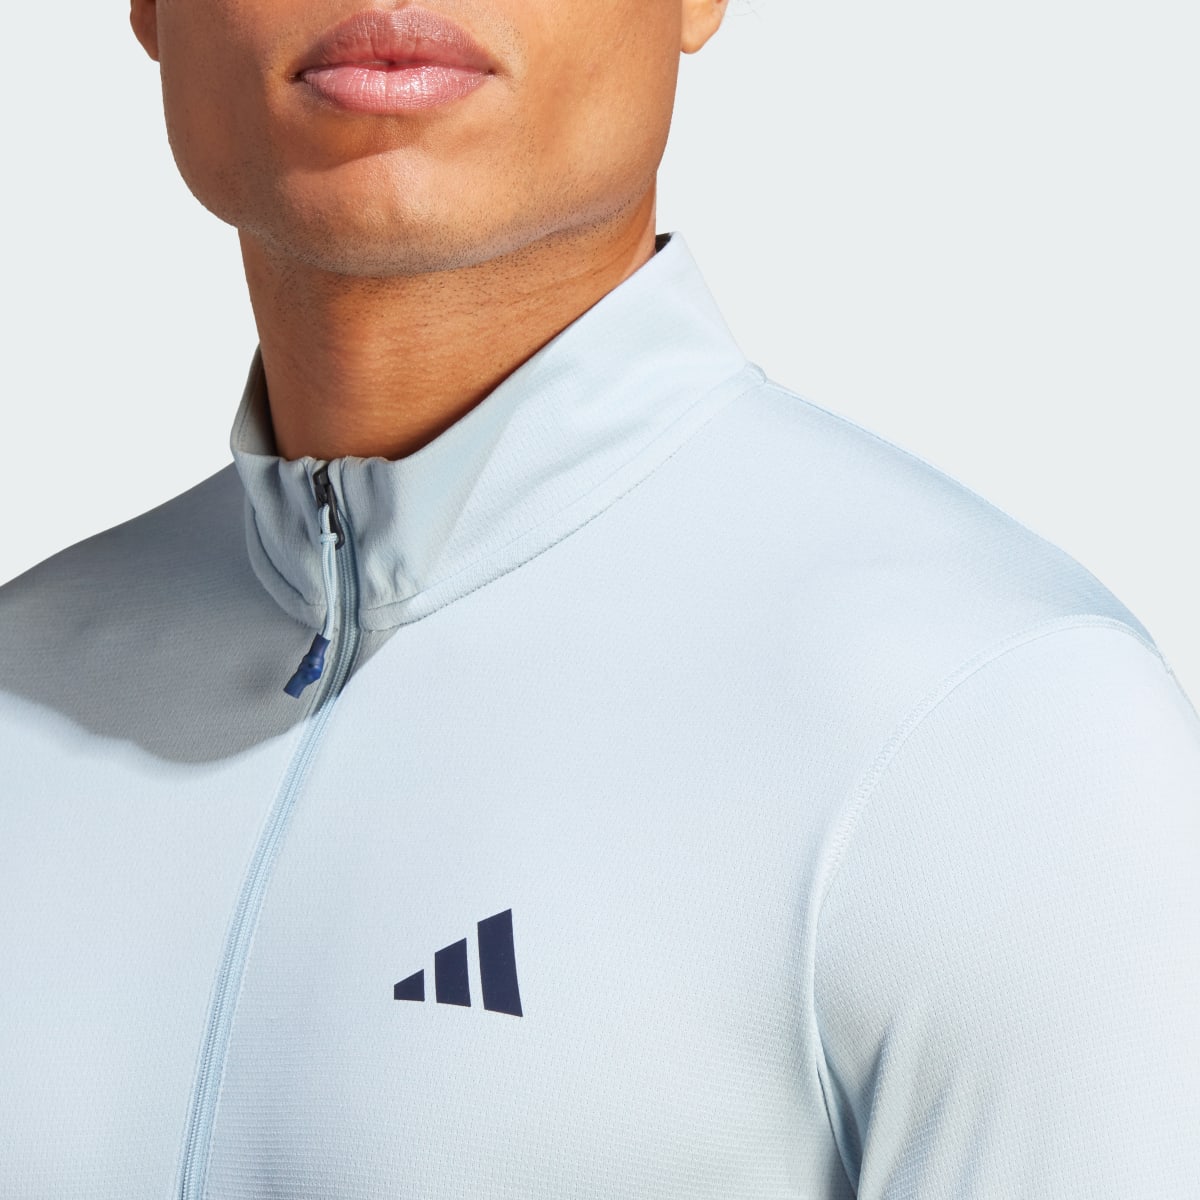 Adidas Train Essentials Seasonal Training 1/4-Zip Long Sleeve Sweatshirt. 6